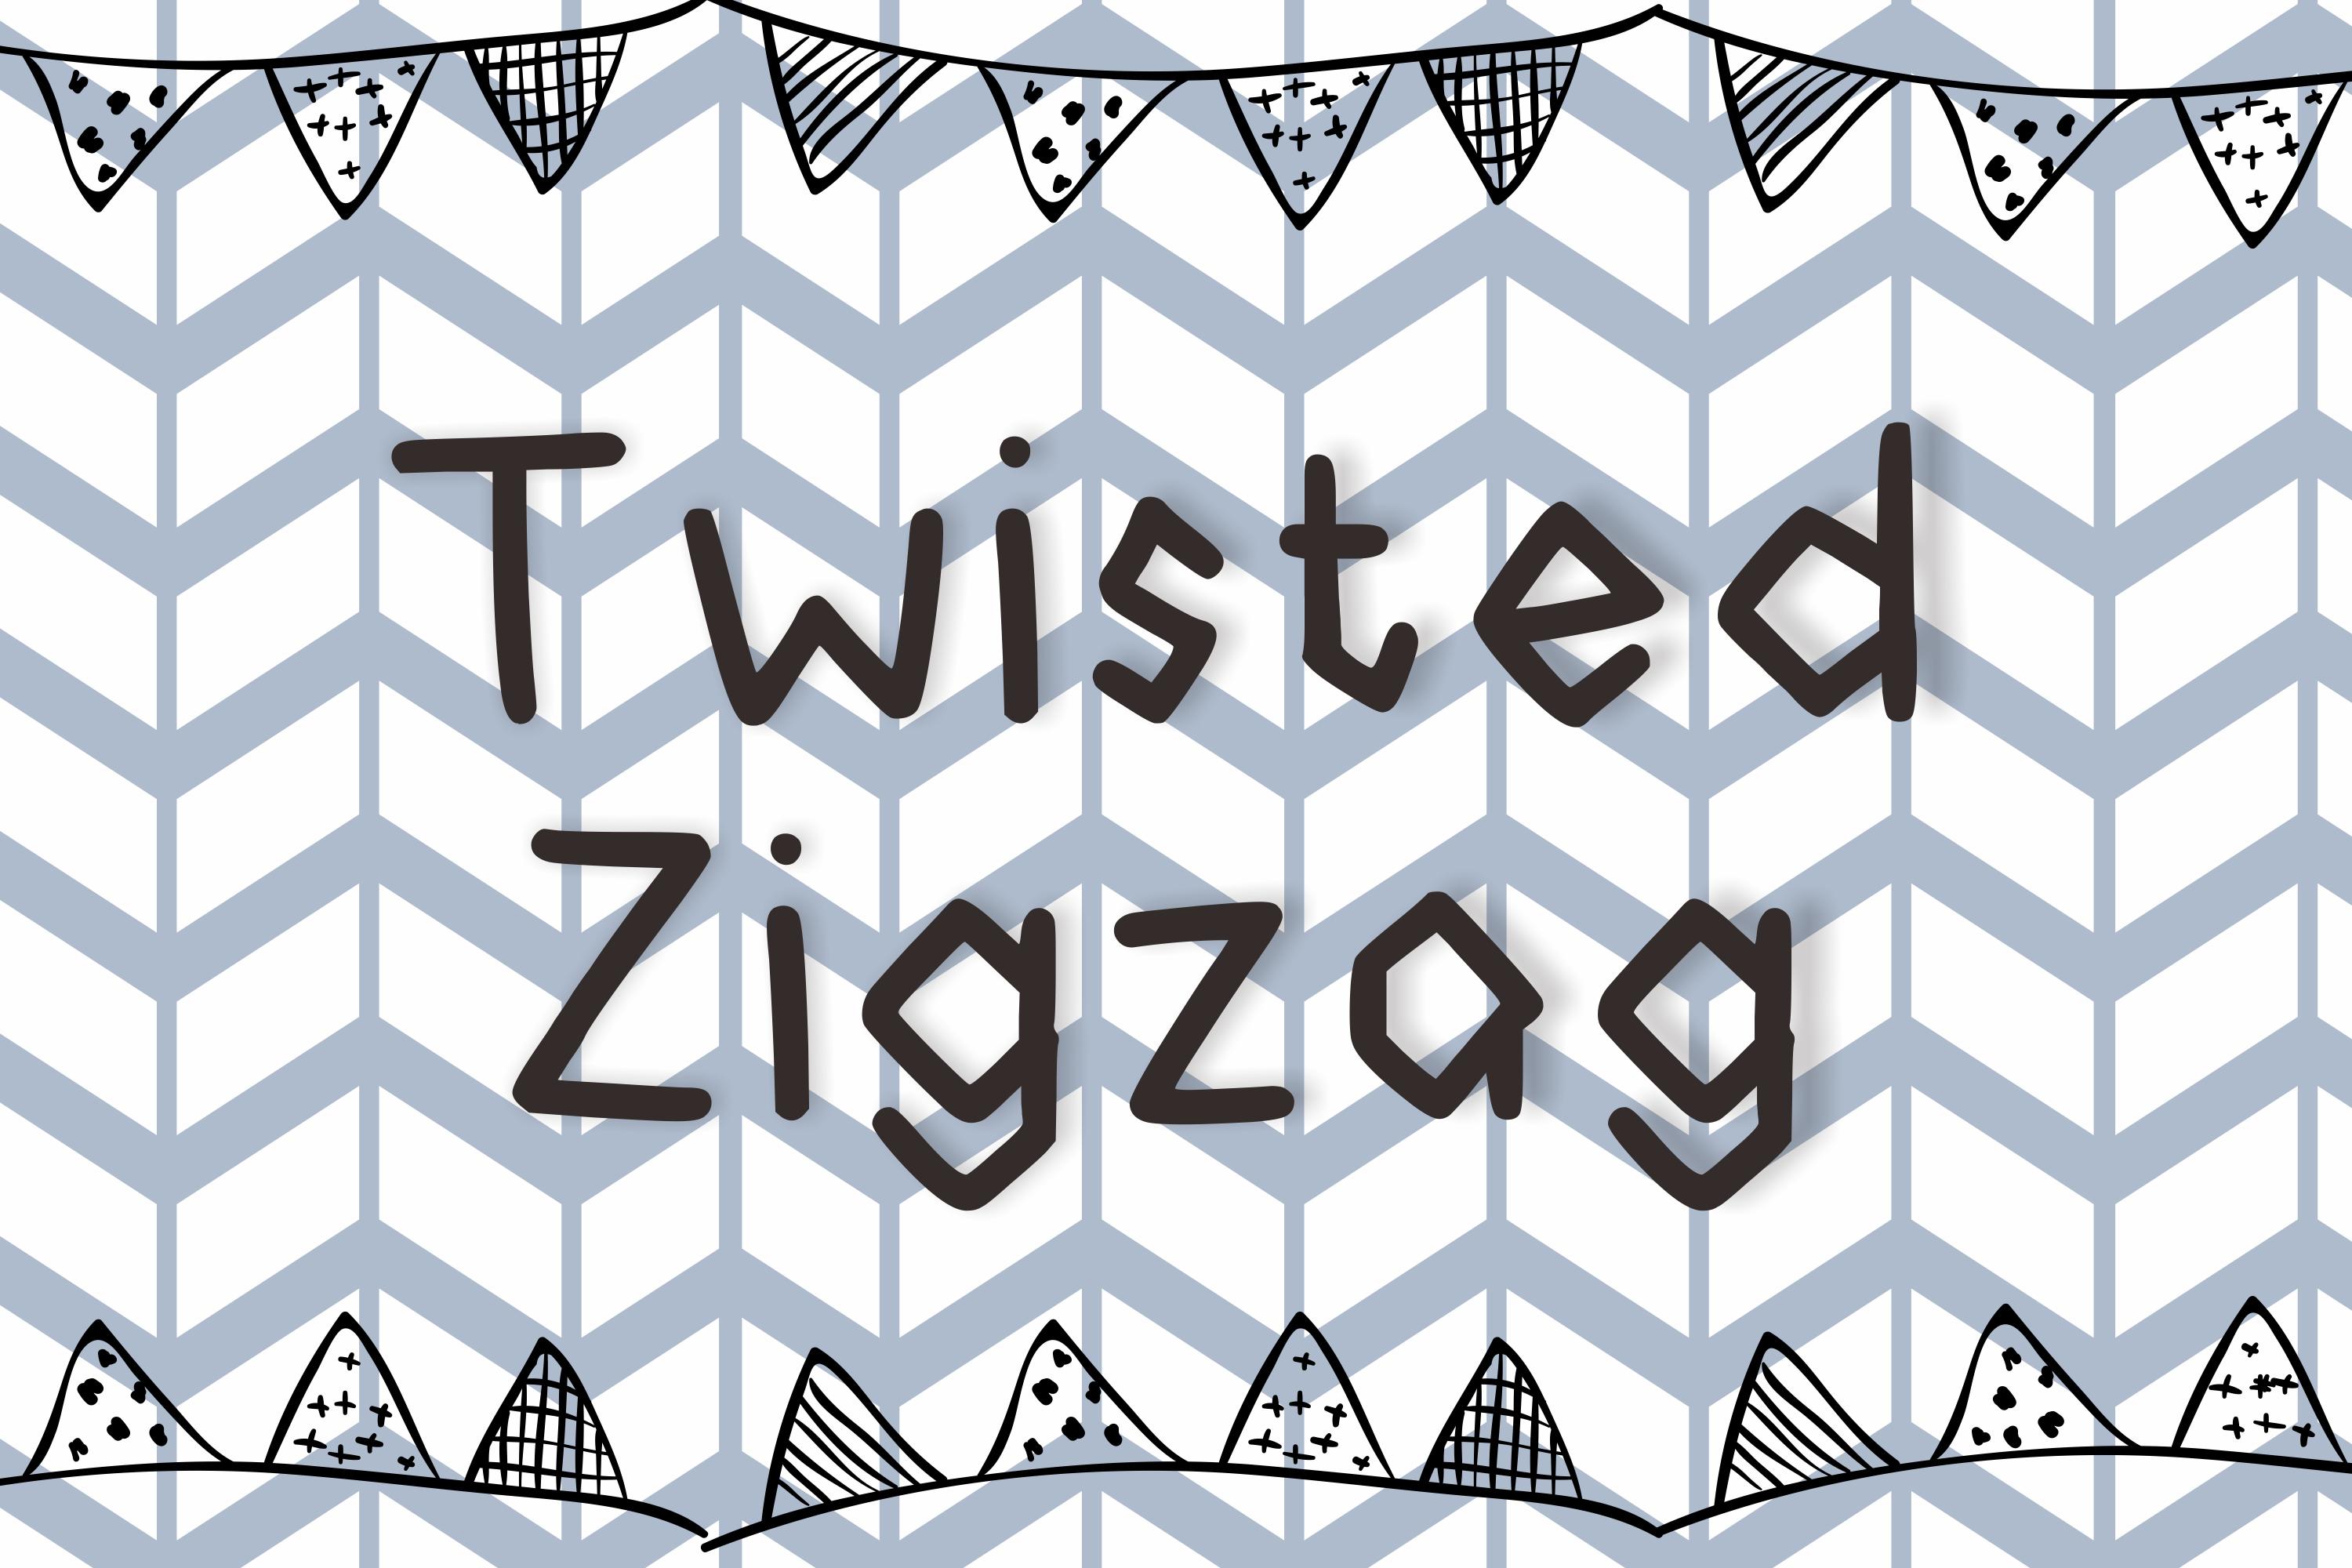 Twisted Zigzag Font